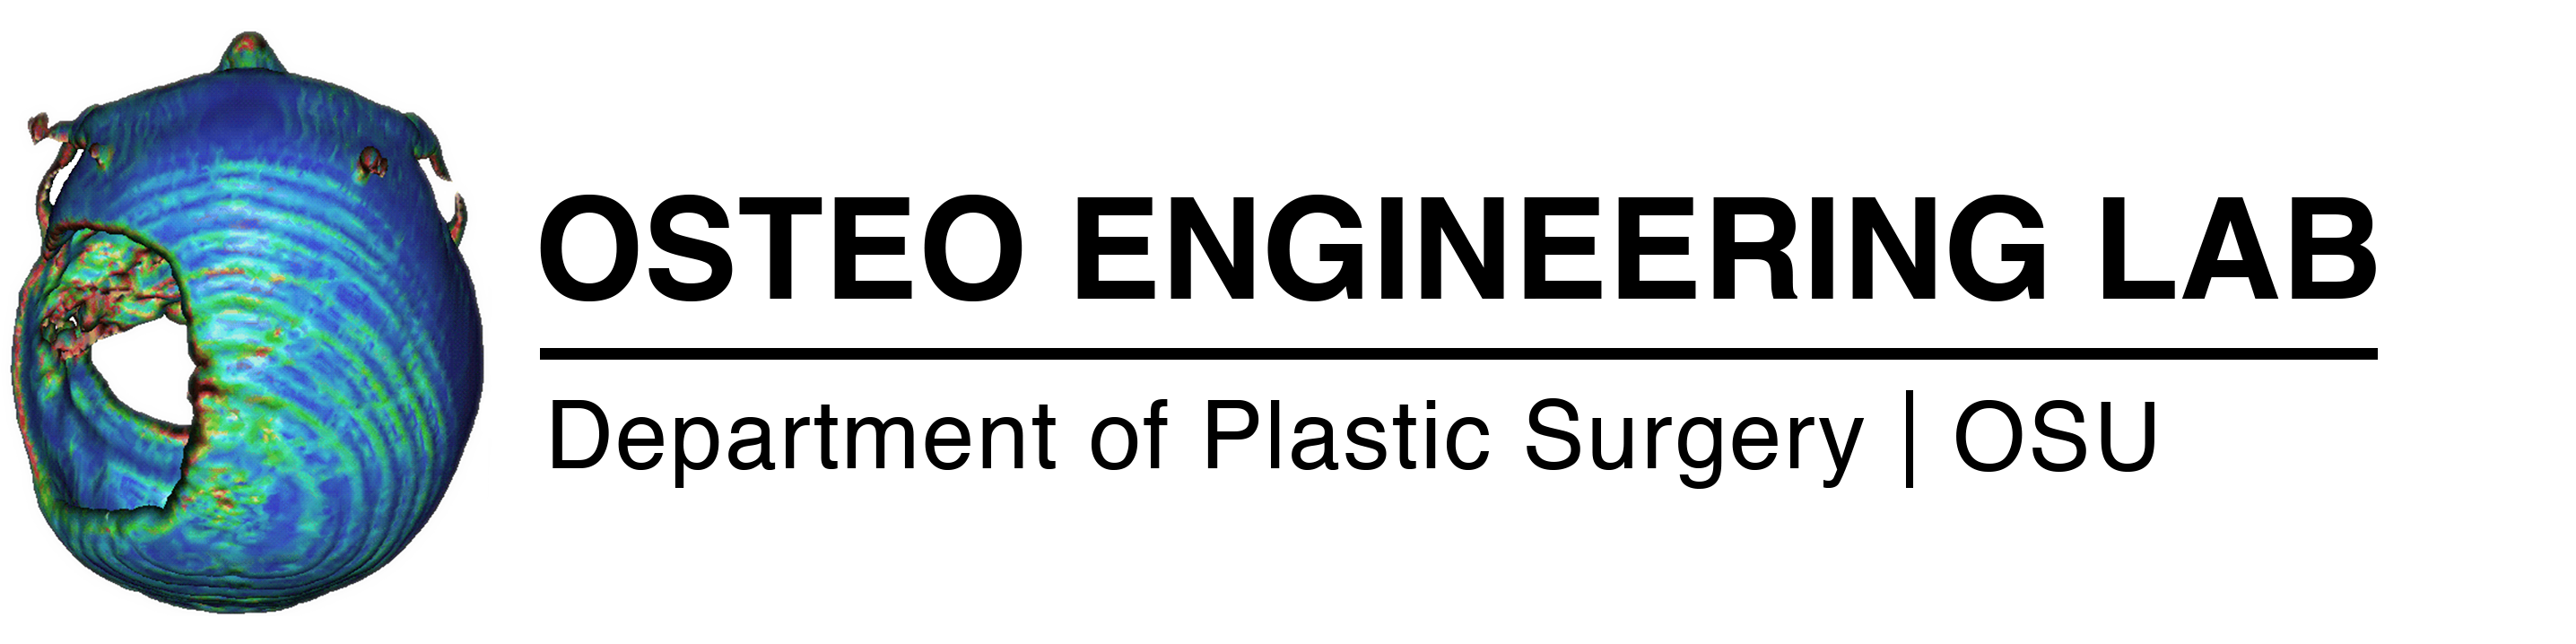 Dean-lab-logo